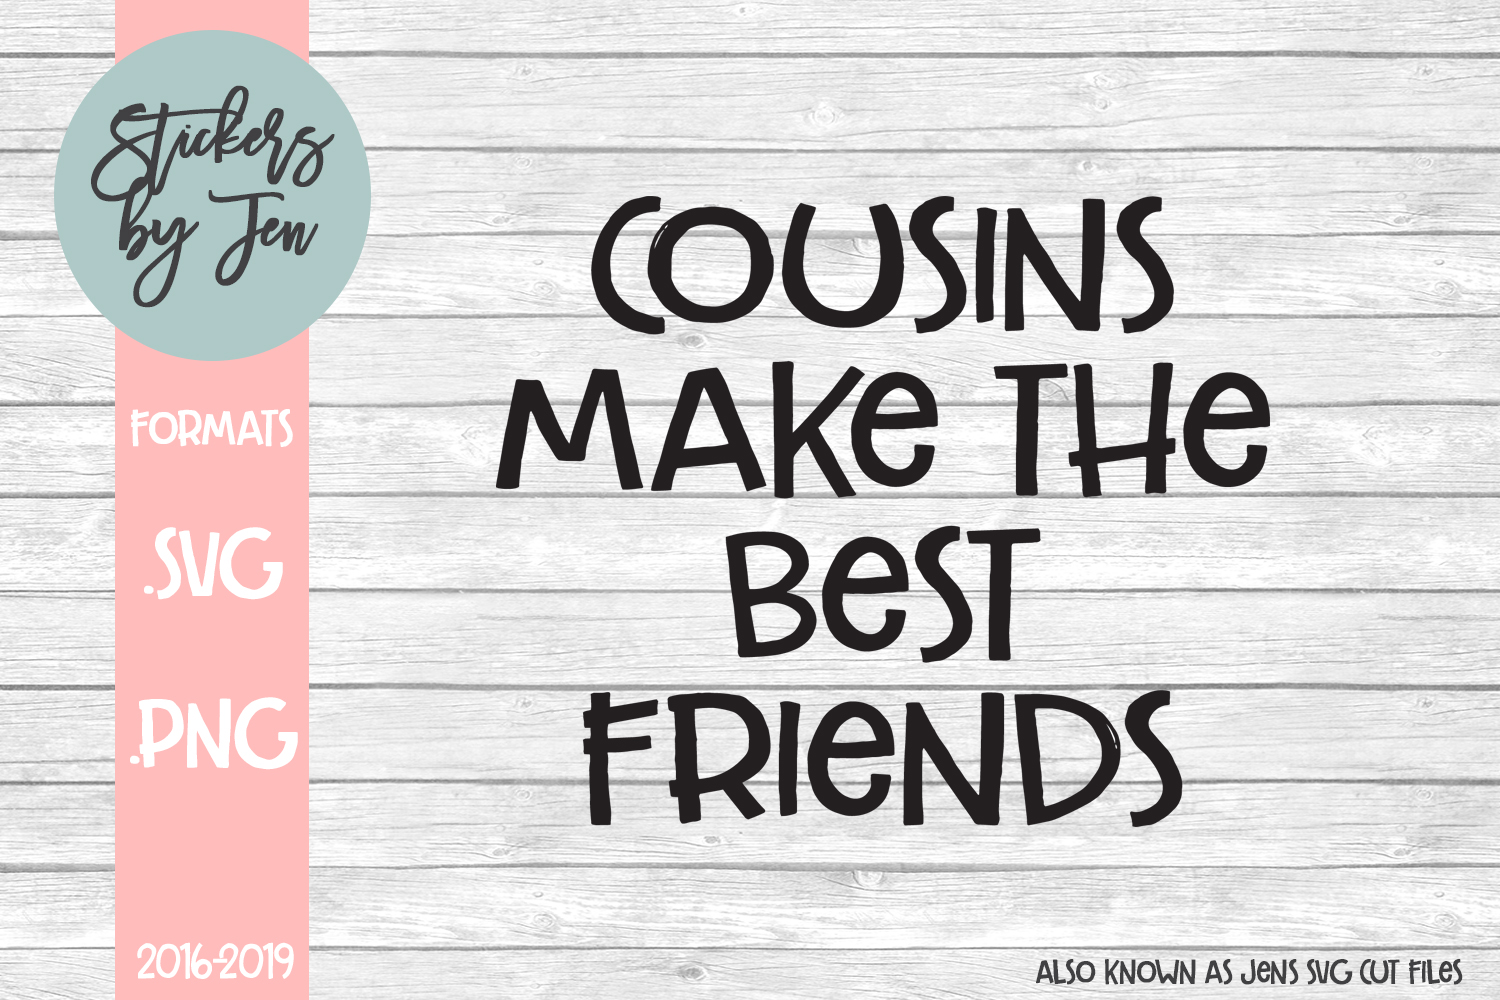 Download Cousins Make the Best Friends SVG Cut file